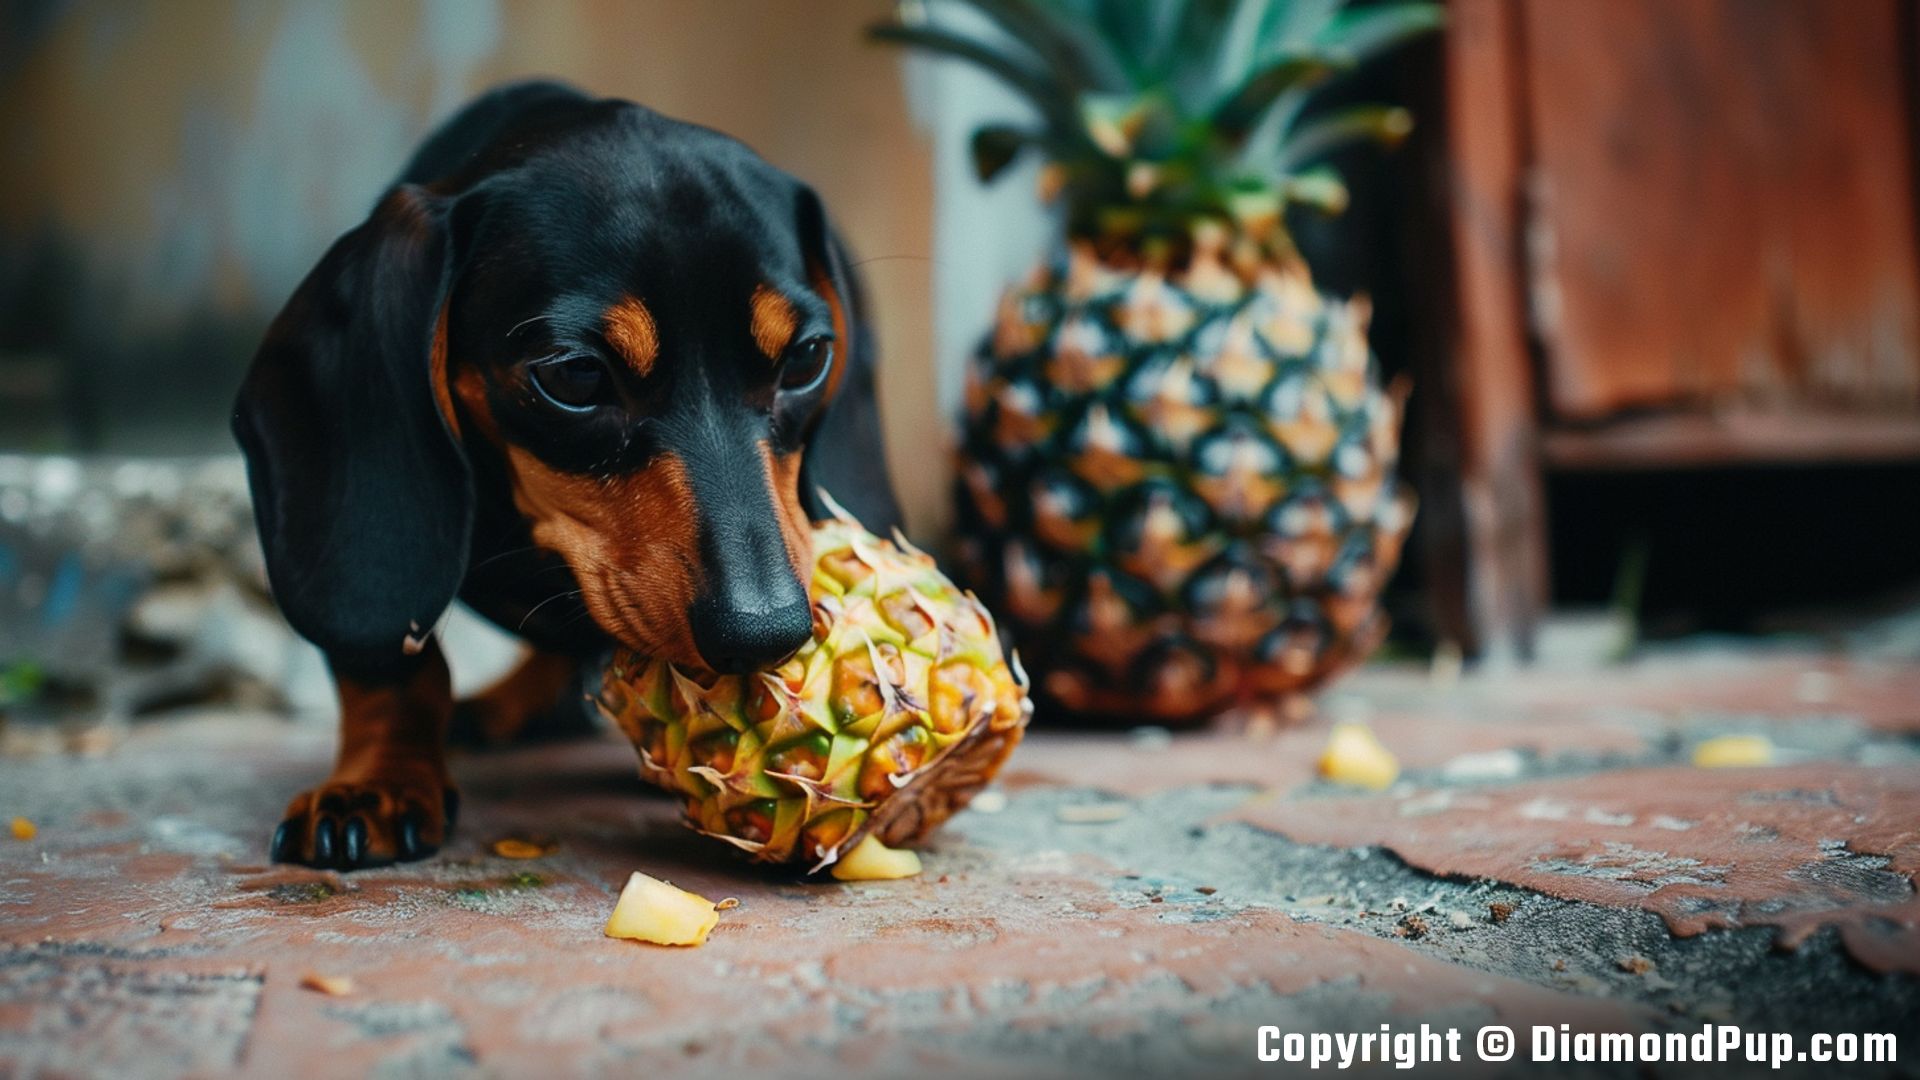 Photograph of a Cute Dachshund Eating Pineapple